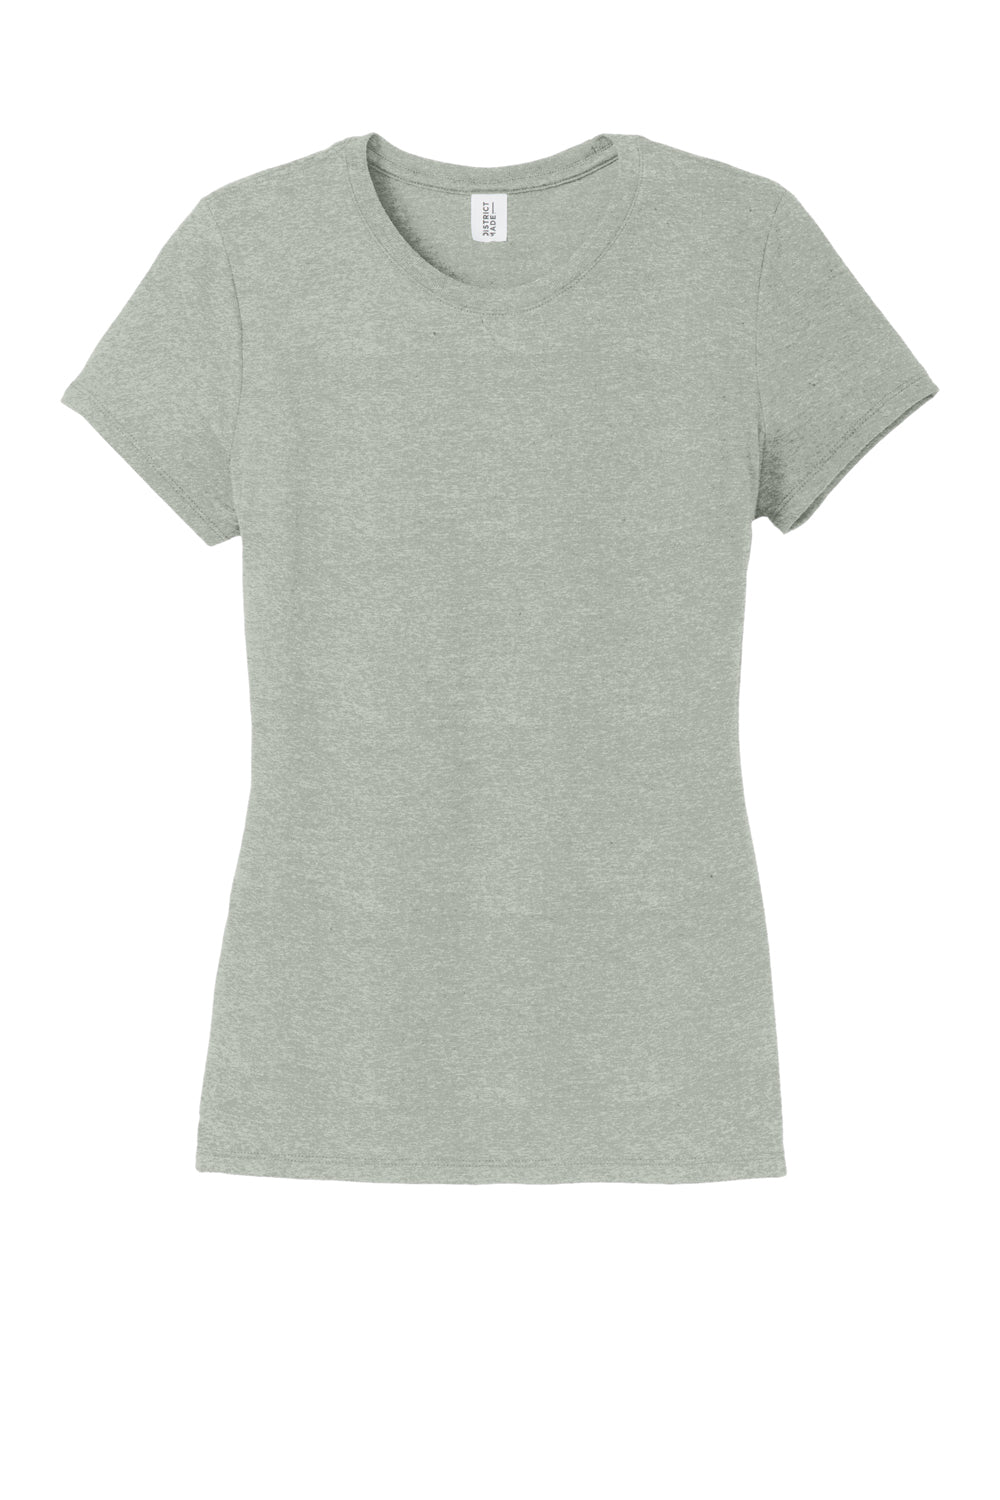 District DM130L Womens Perfect Tri Short Sleeve Crewneck T-Shirt Heather Grey Flat Front